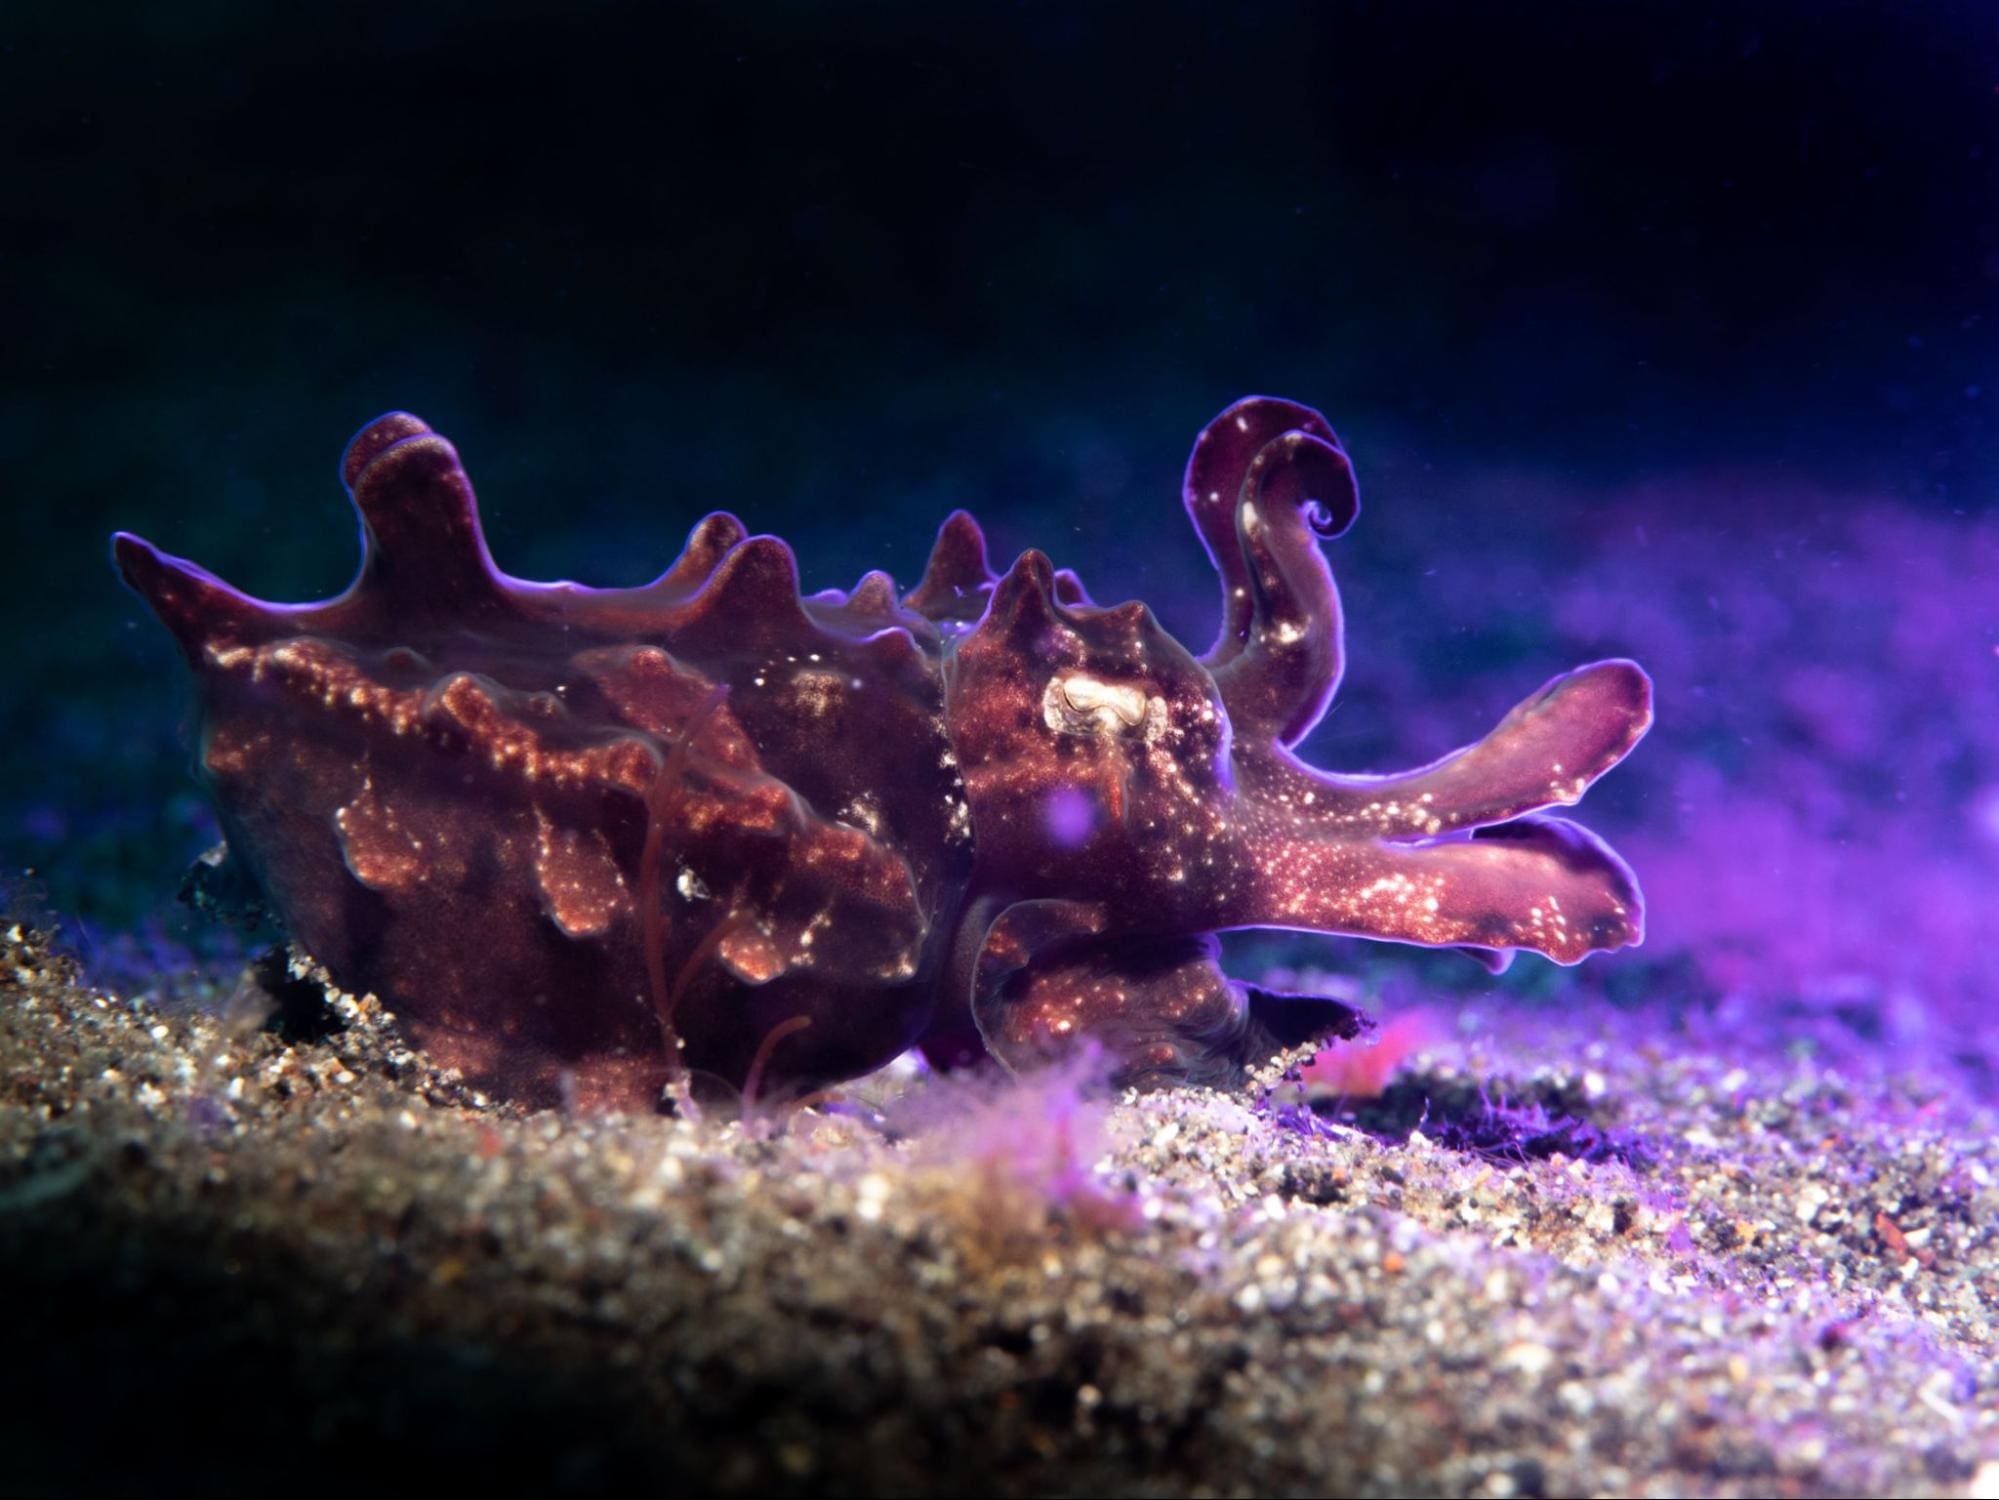 The mesmerising image of flamboyant cuttlefish captured at night